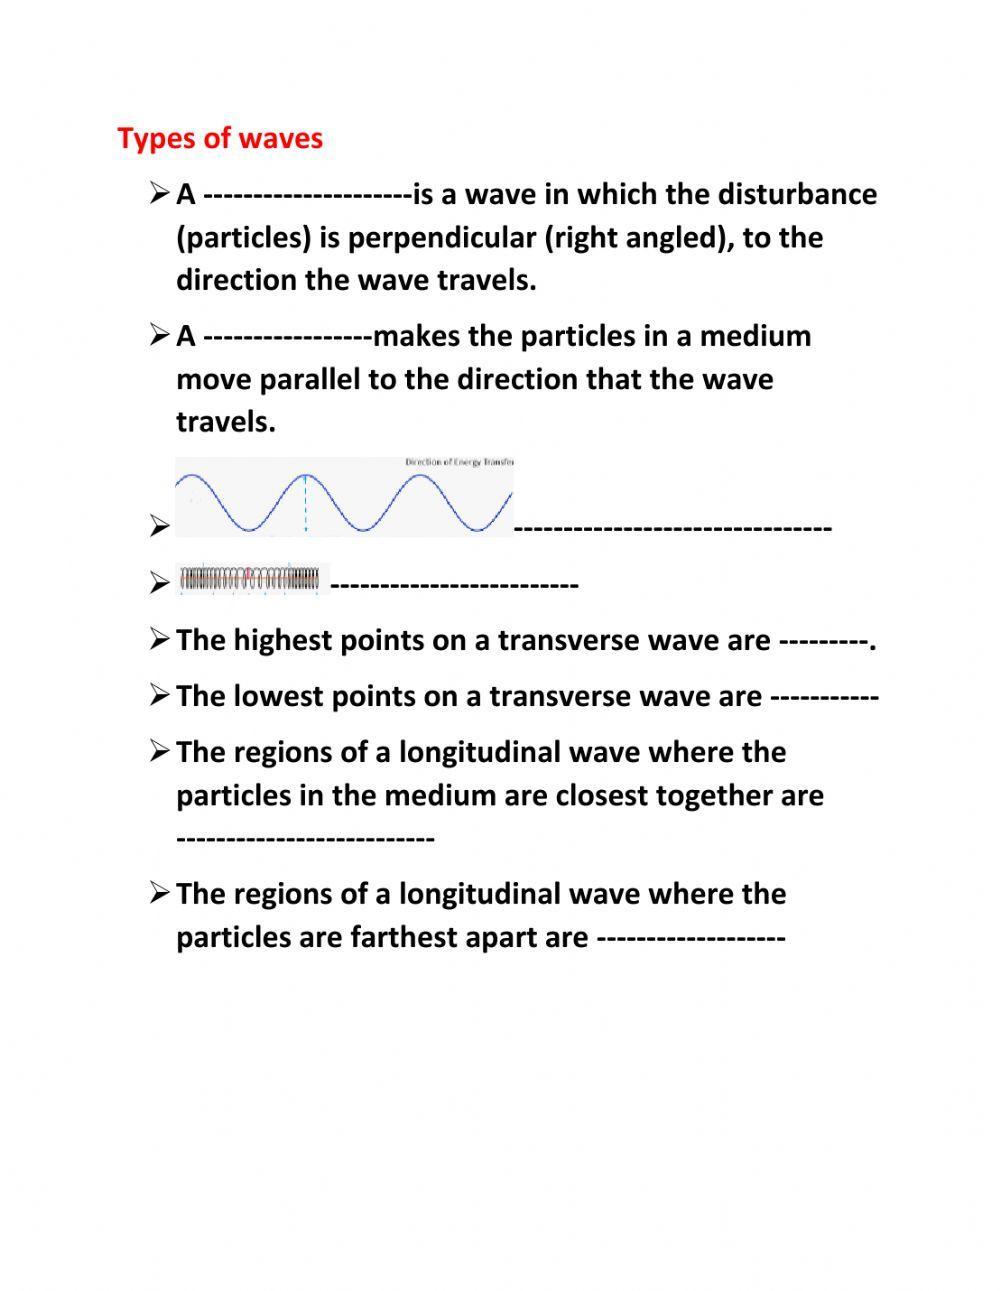 Transverse and longitudinal wave